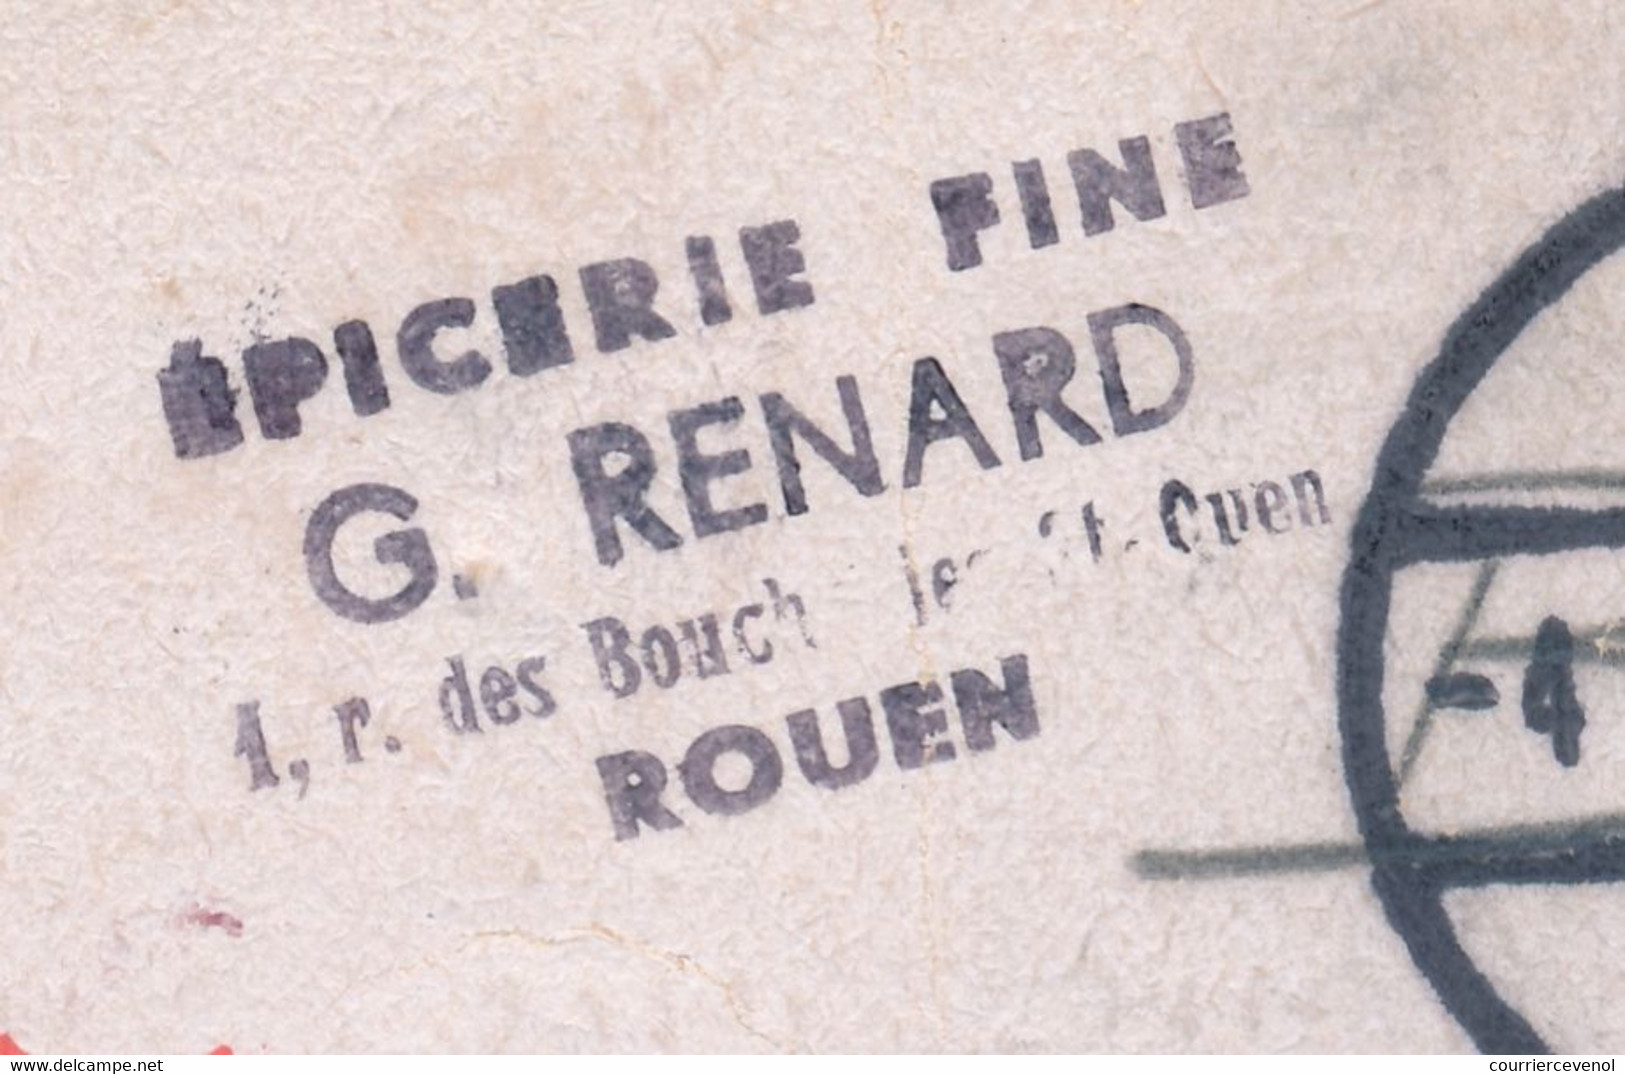 KRIEGSGEFANGENENPOST - Postkarte Depuis Oflag XIIIA Unterlager A Censeur 22 - 1941 - Cachet Epicerie Fine G.Renard - WW II